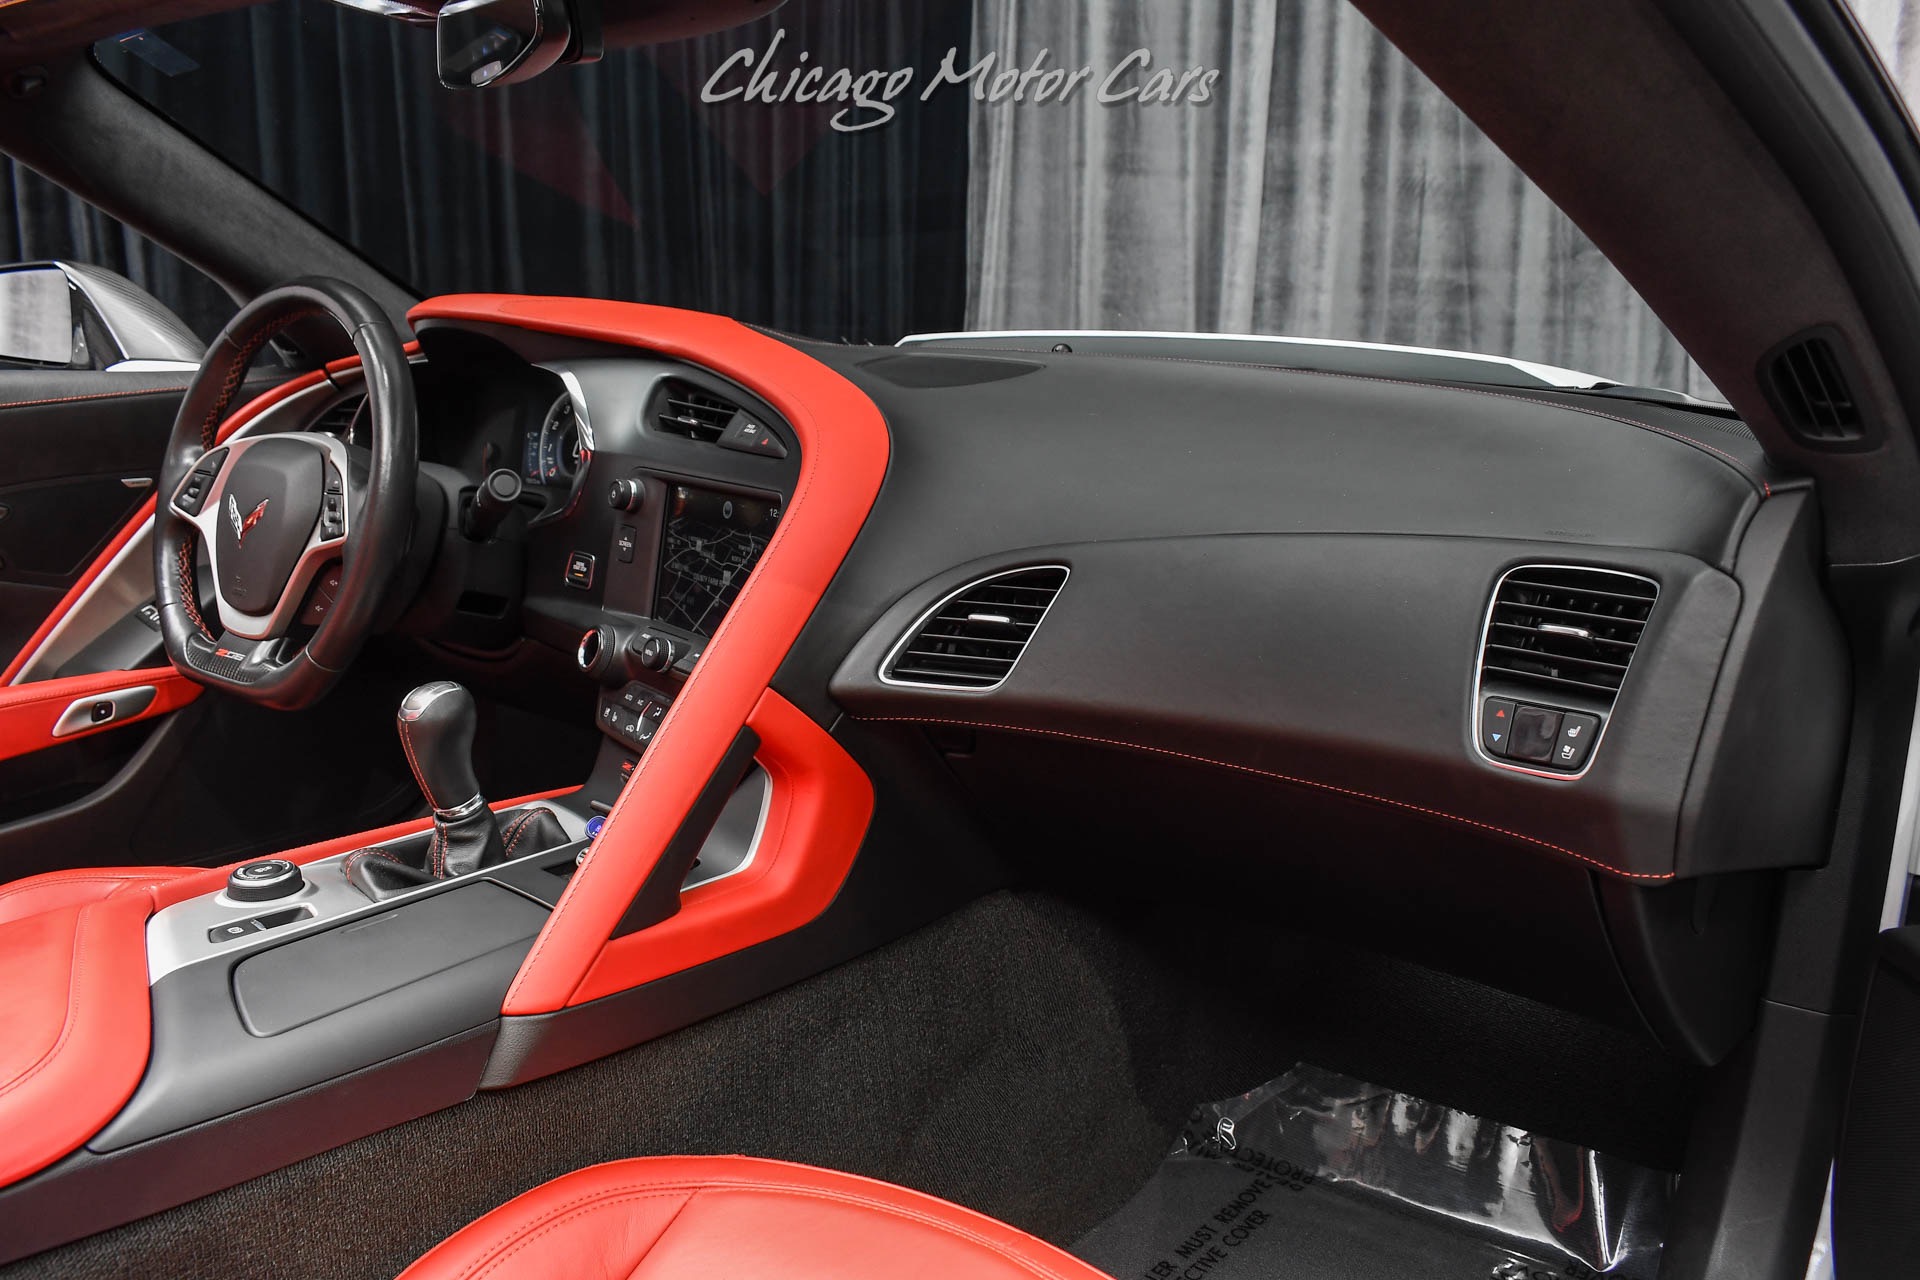 Used-2015-Chevrolet-Corvette-Z06-3LZ-7-Speed-Manual-BForged-Wheels-Headers-LOW-MILES